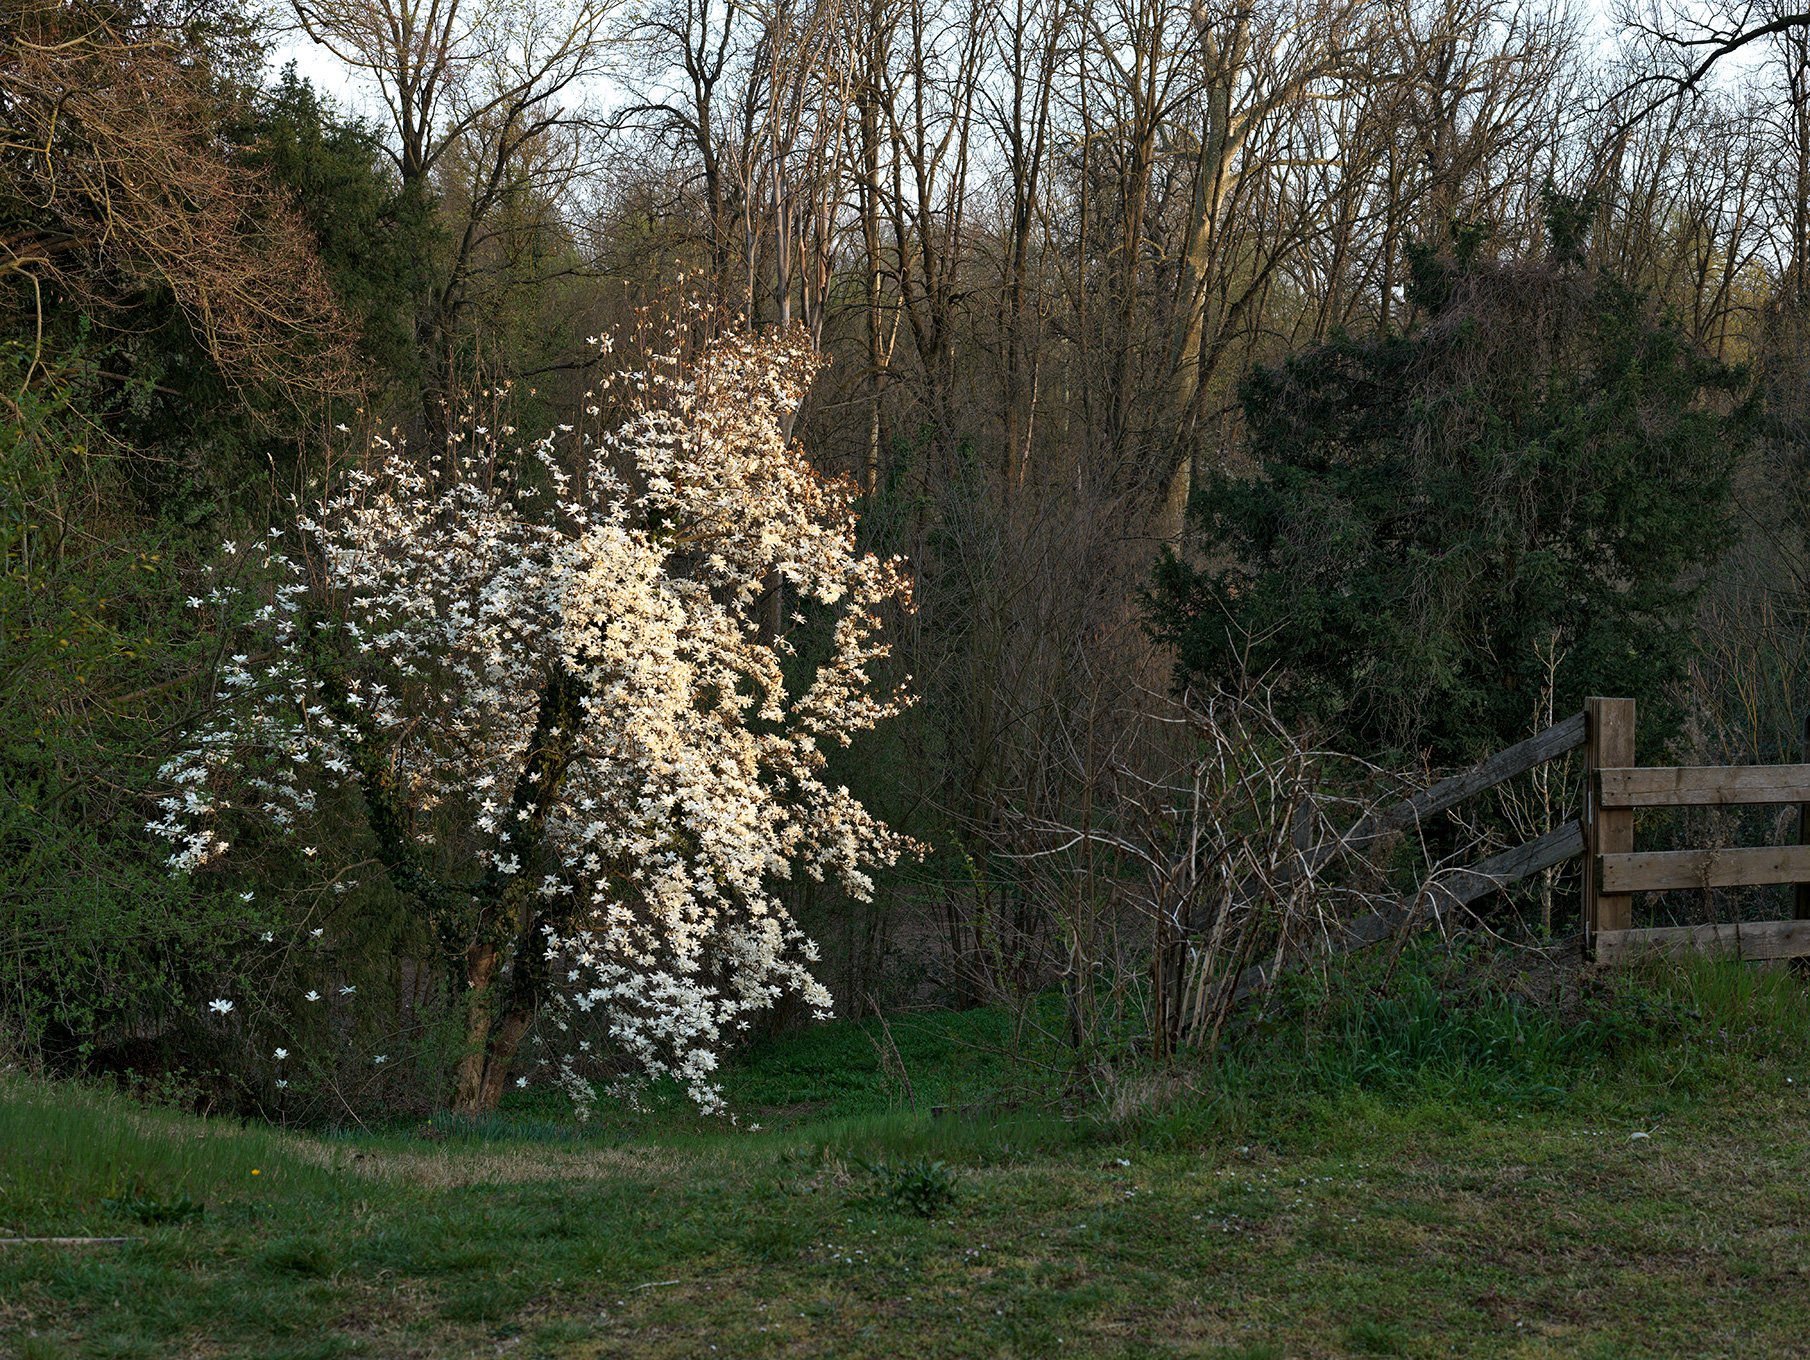   Starry magnolia in bloom, April 2022  